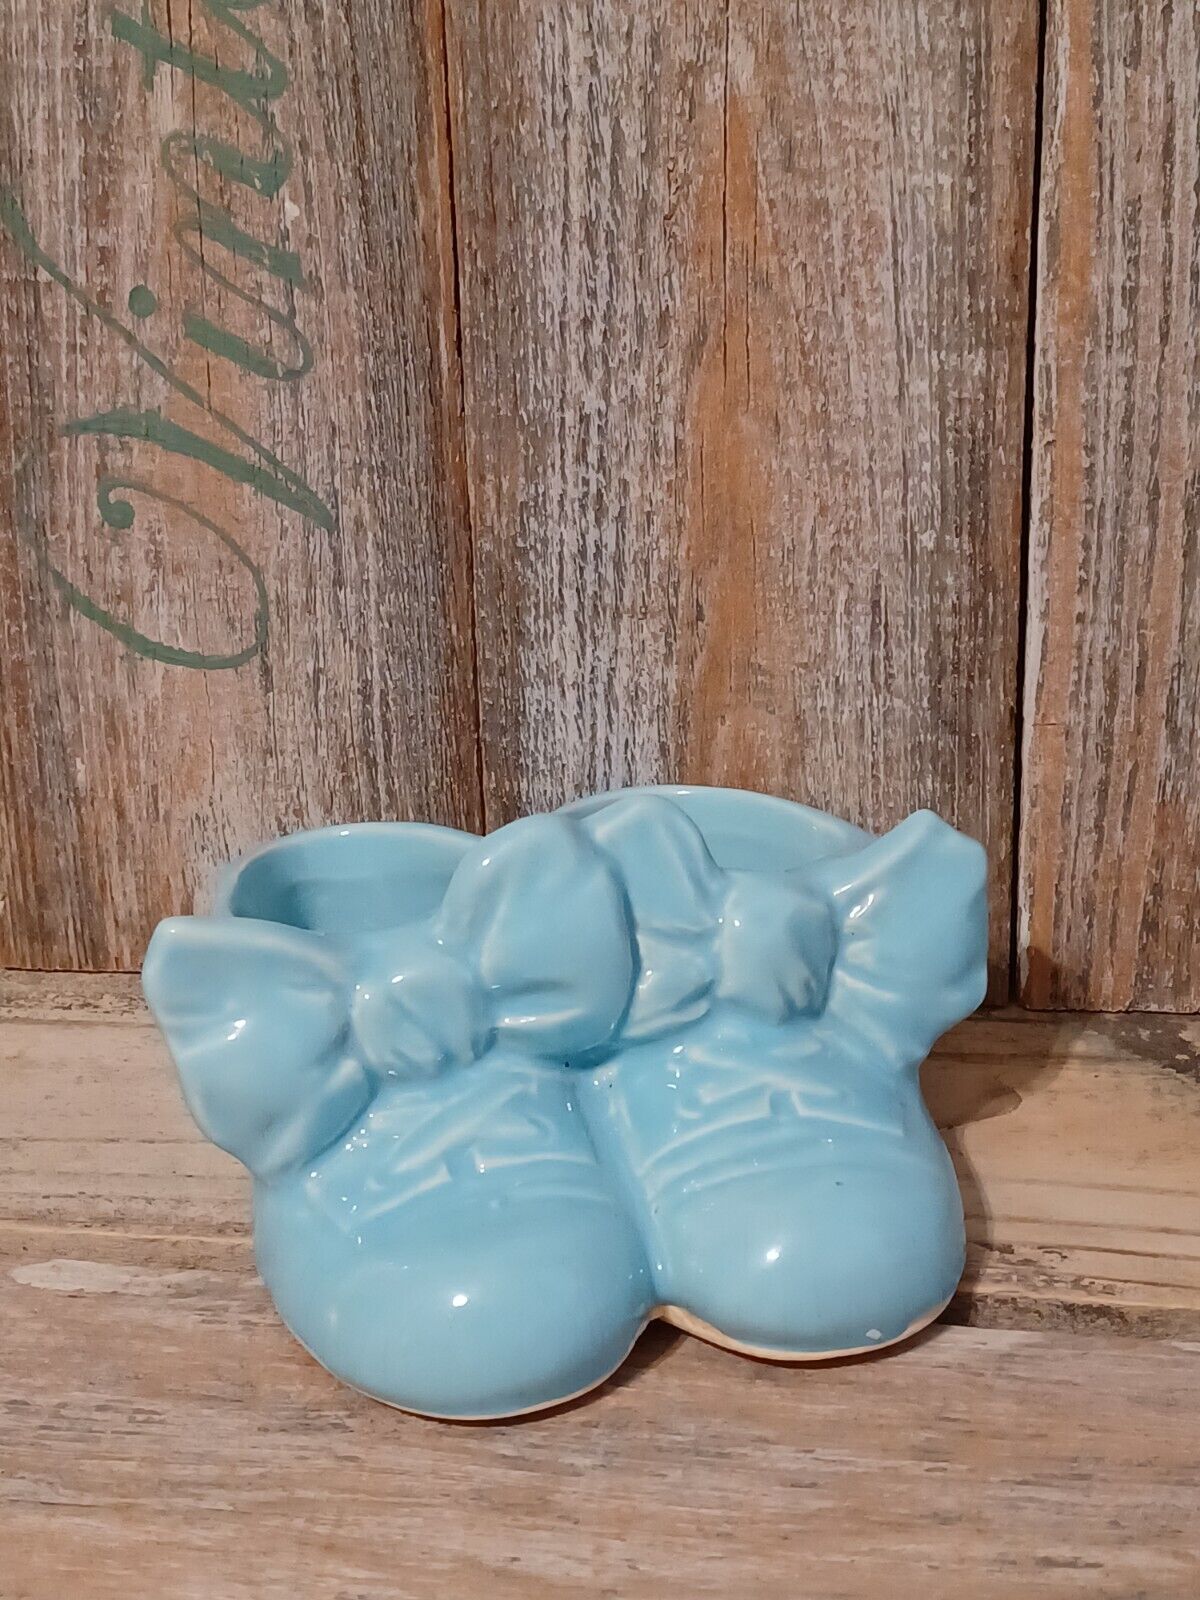 Vintage Pottery Planter Baby Booties Blue Shoe Nursery Storage Ceramic Heavy